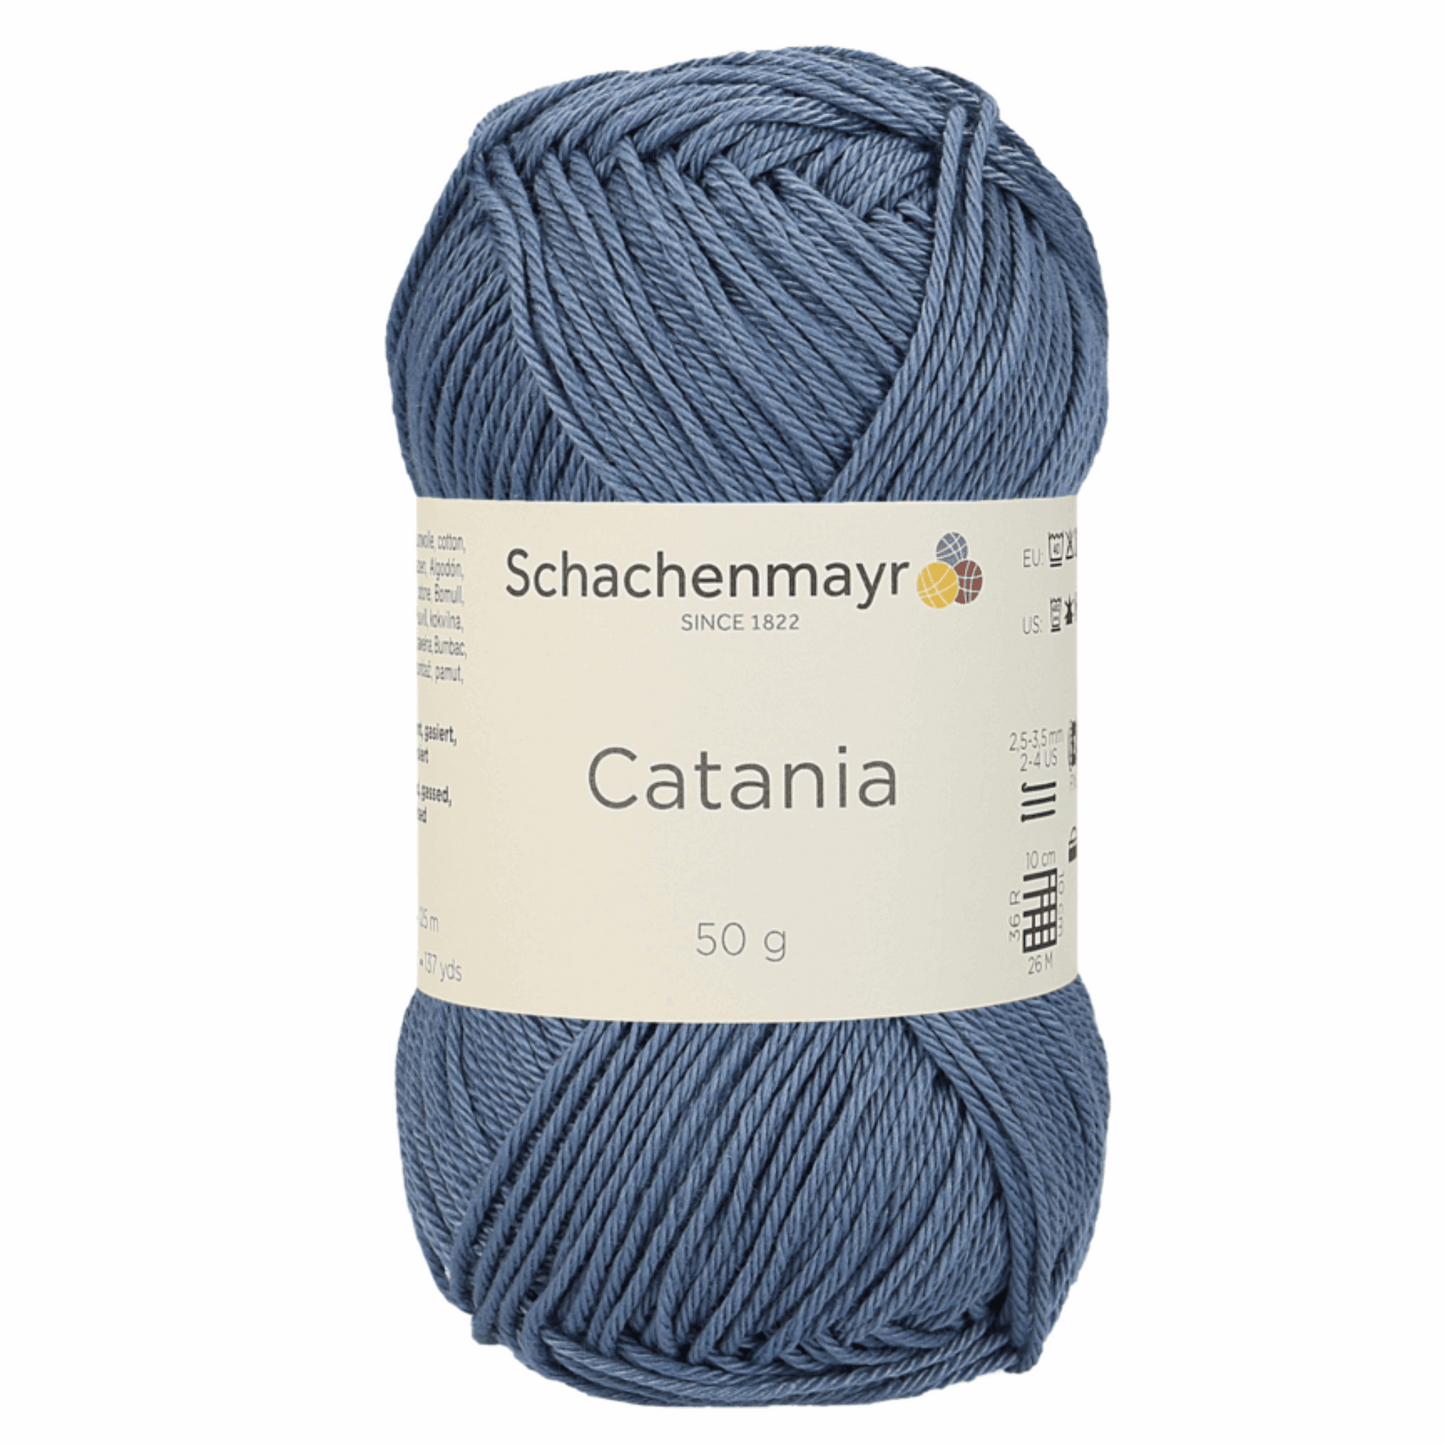 Catania 50g, 90344, Farbe 269, graublau